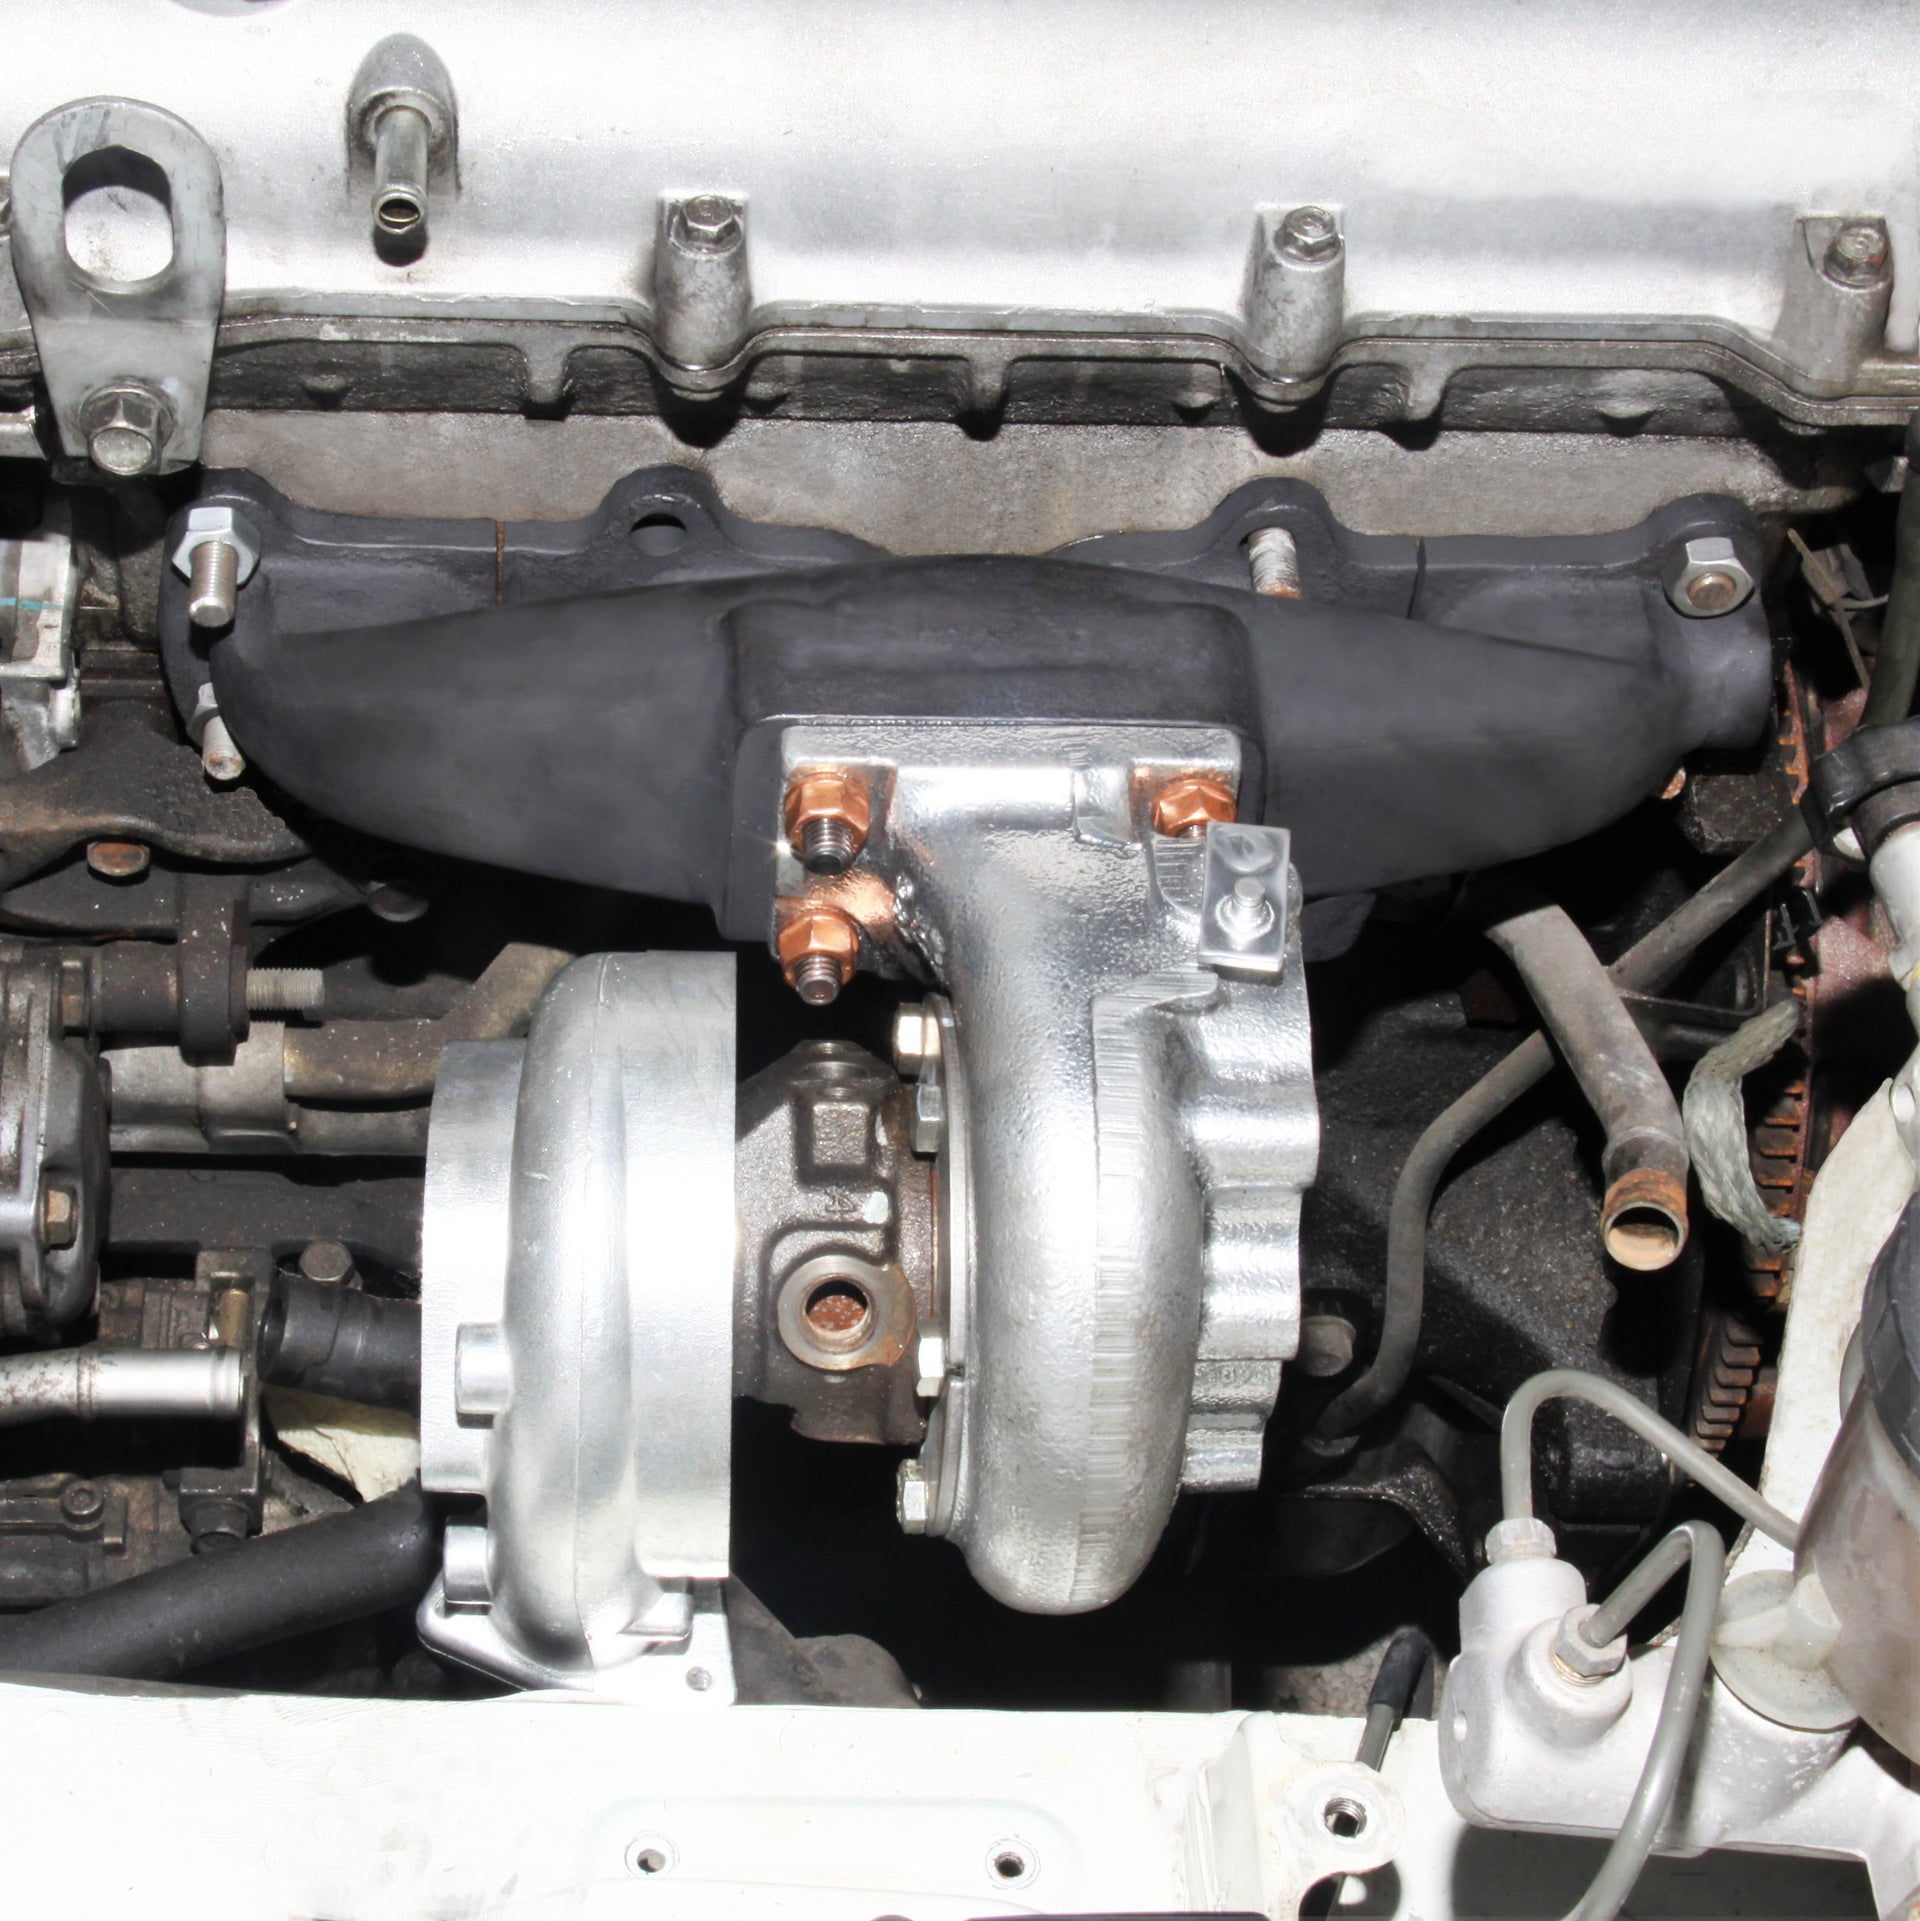 Blip Speed 1.8l Miata Turbo Manifold mounted with t25 frame turbo as a part of a BEGI Miata turbo kit